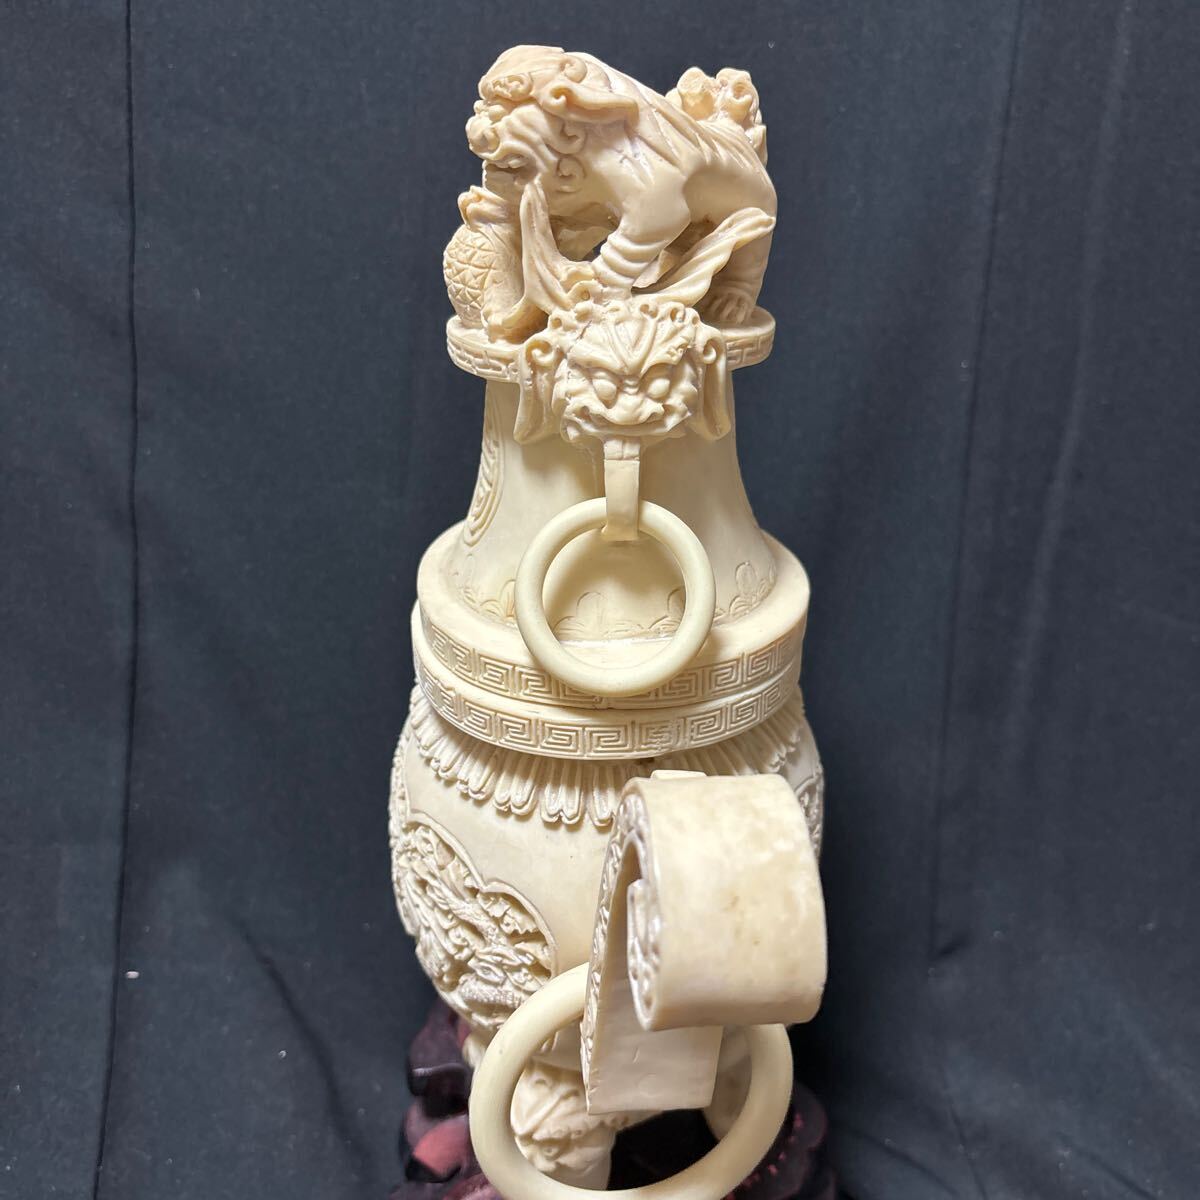 中國古美術 象牙風香炉 三つ脚 台座付き 高さ30から35㌢ 香炉 乾隆 獅子 中国美術 細密彫刻 玉獅子 香道具 飾り物 中国古玩の画像5